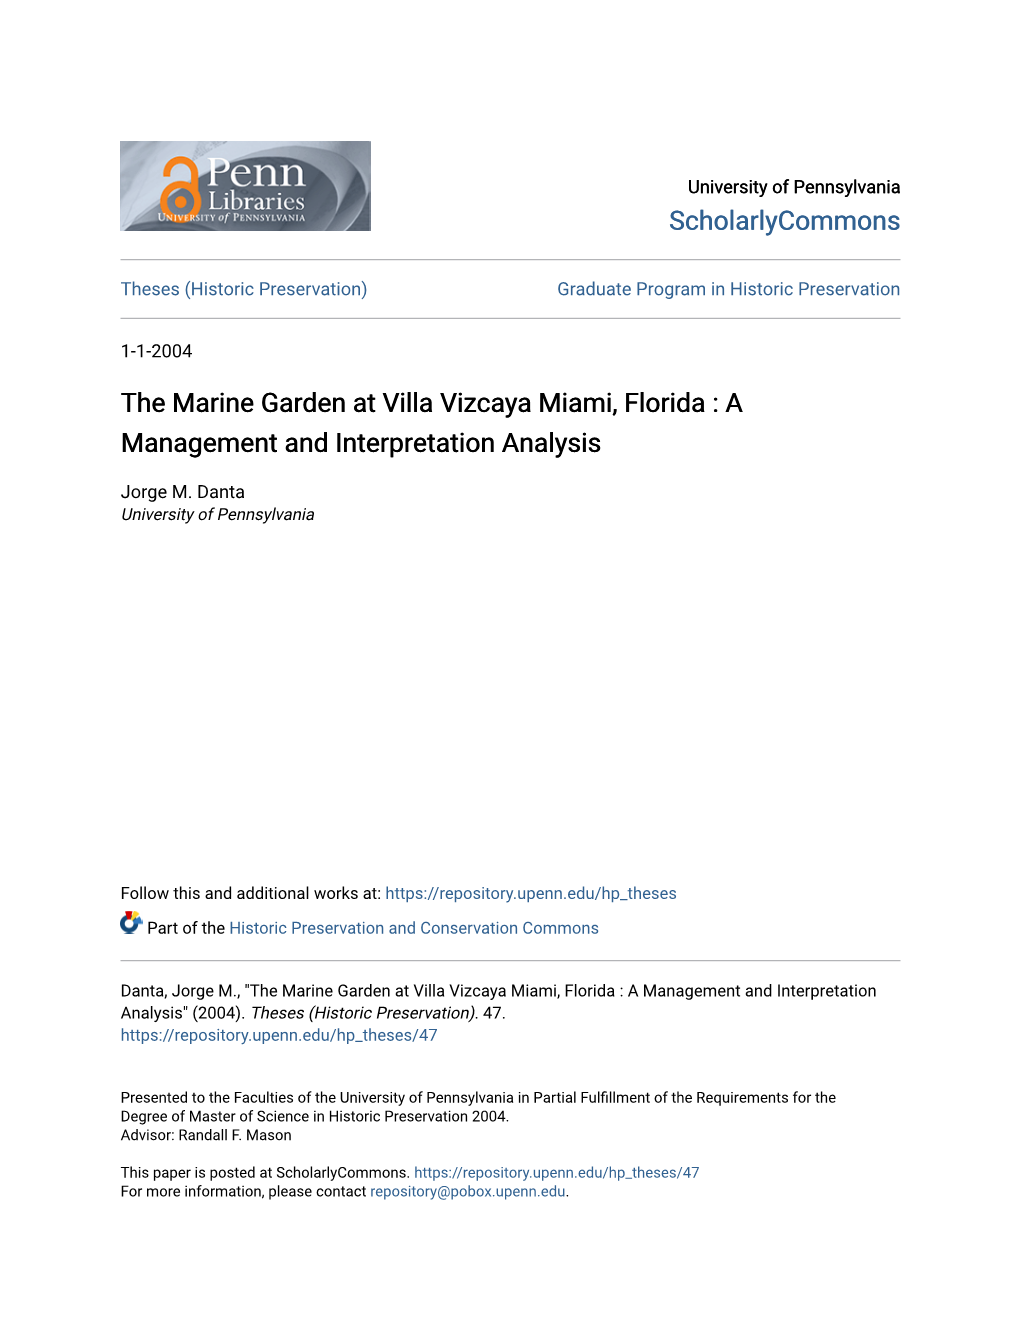 The Marine Garden at Villa Vizcaya Miami, Florida : a Management and Interpretation Analysis